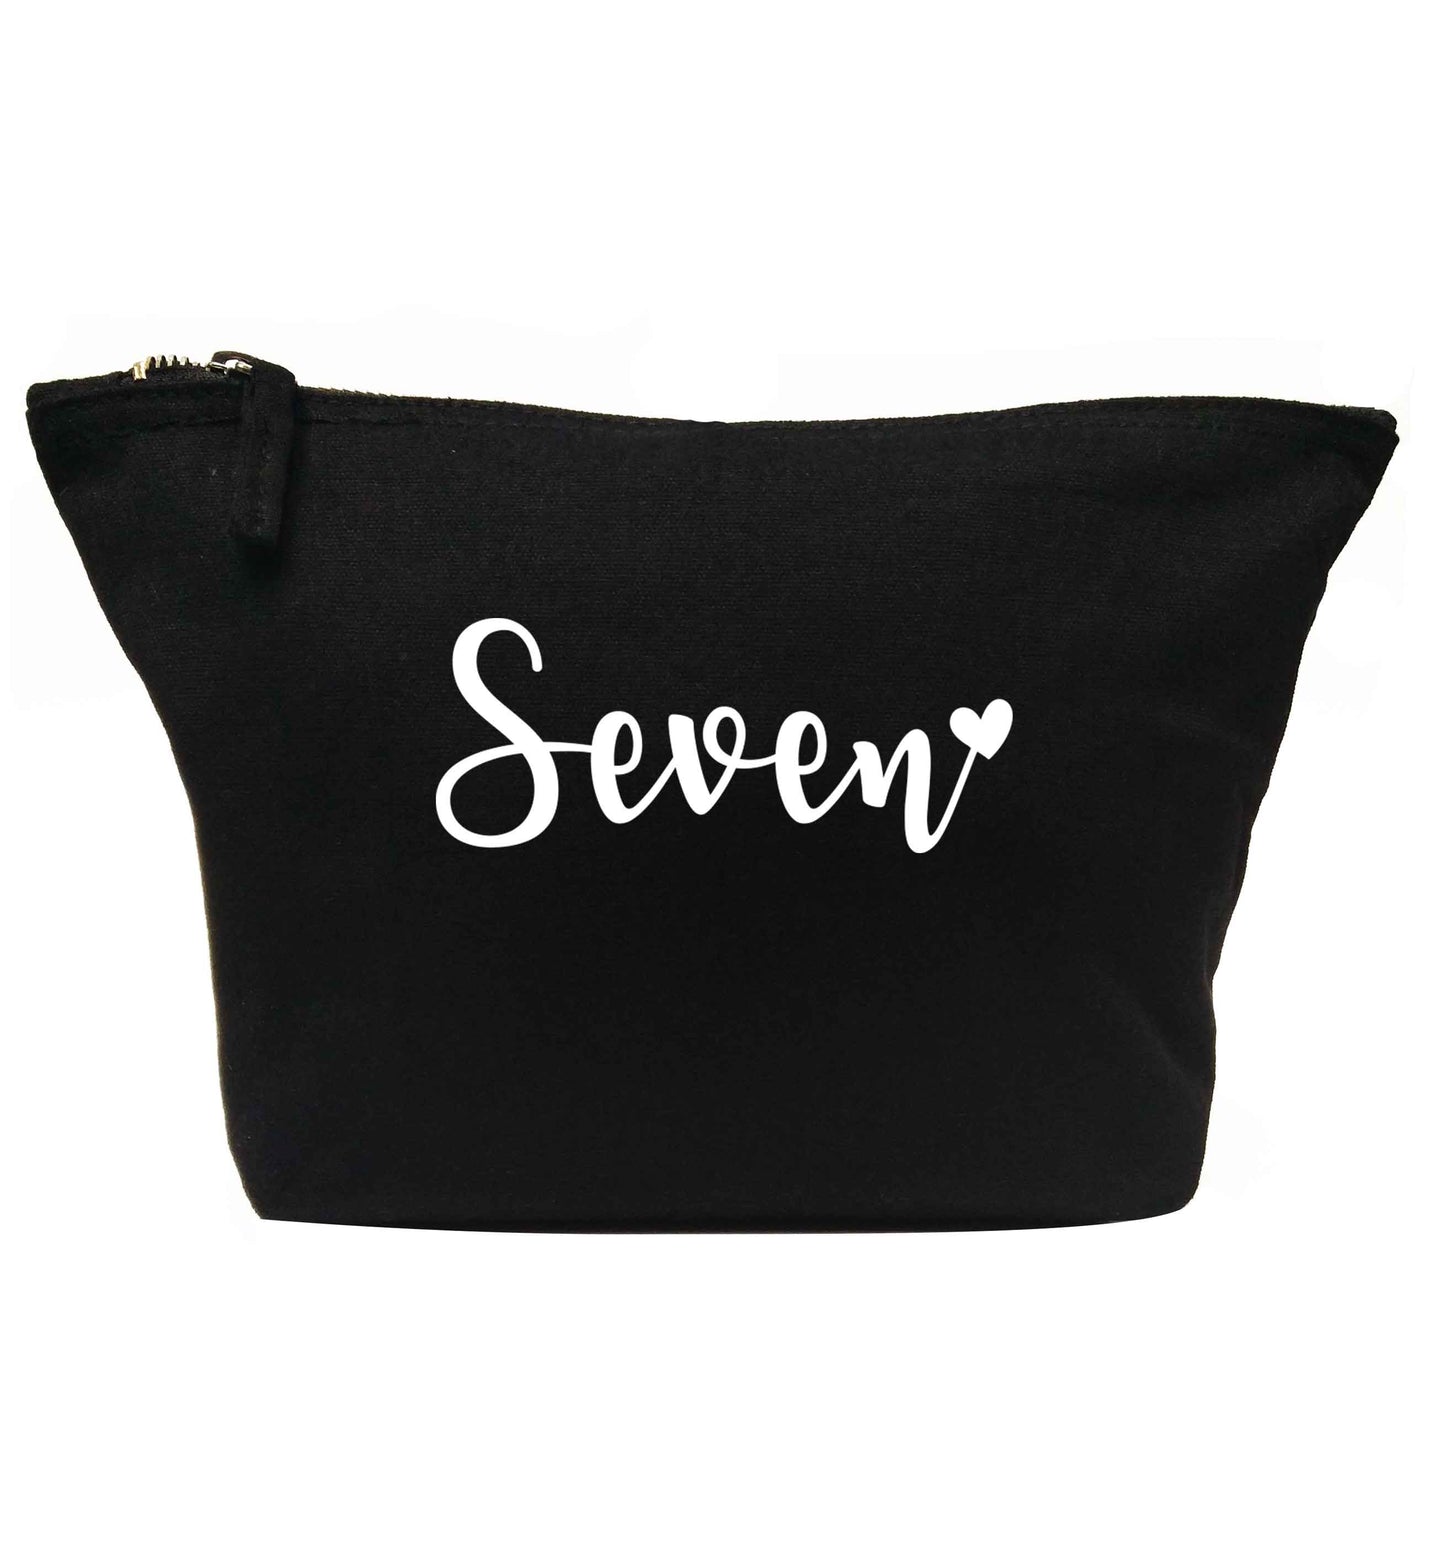 Seven and heart | Makeup / wash bag